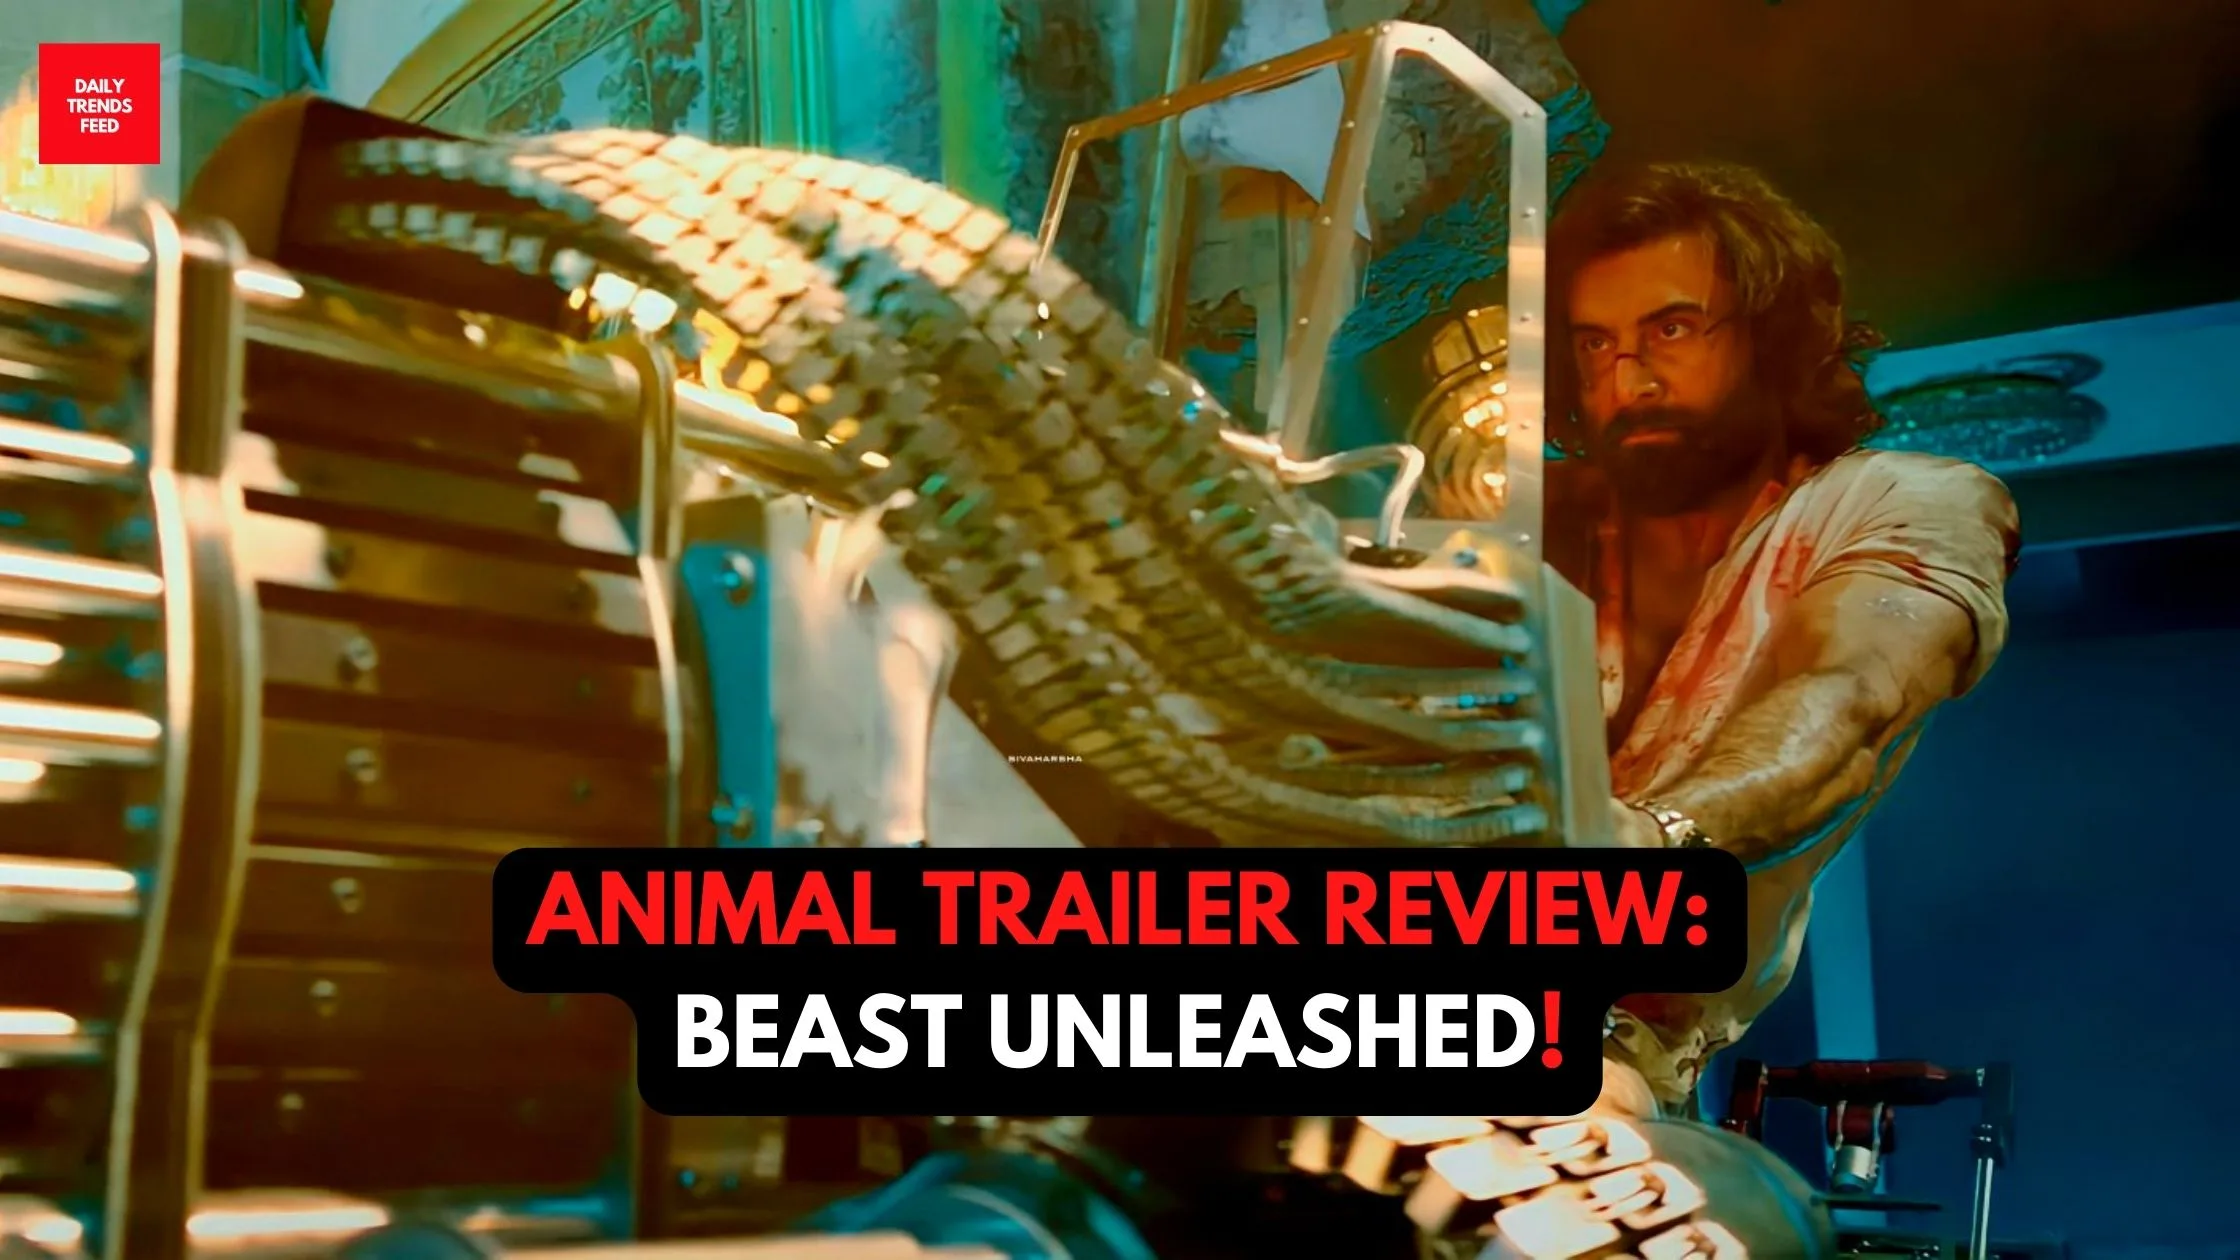 Animal Trailer Review: Ranbir Kapoor's Intense Avatar Steals Hearts!